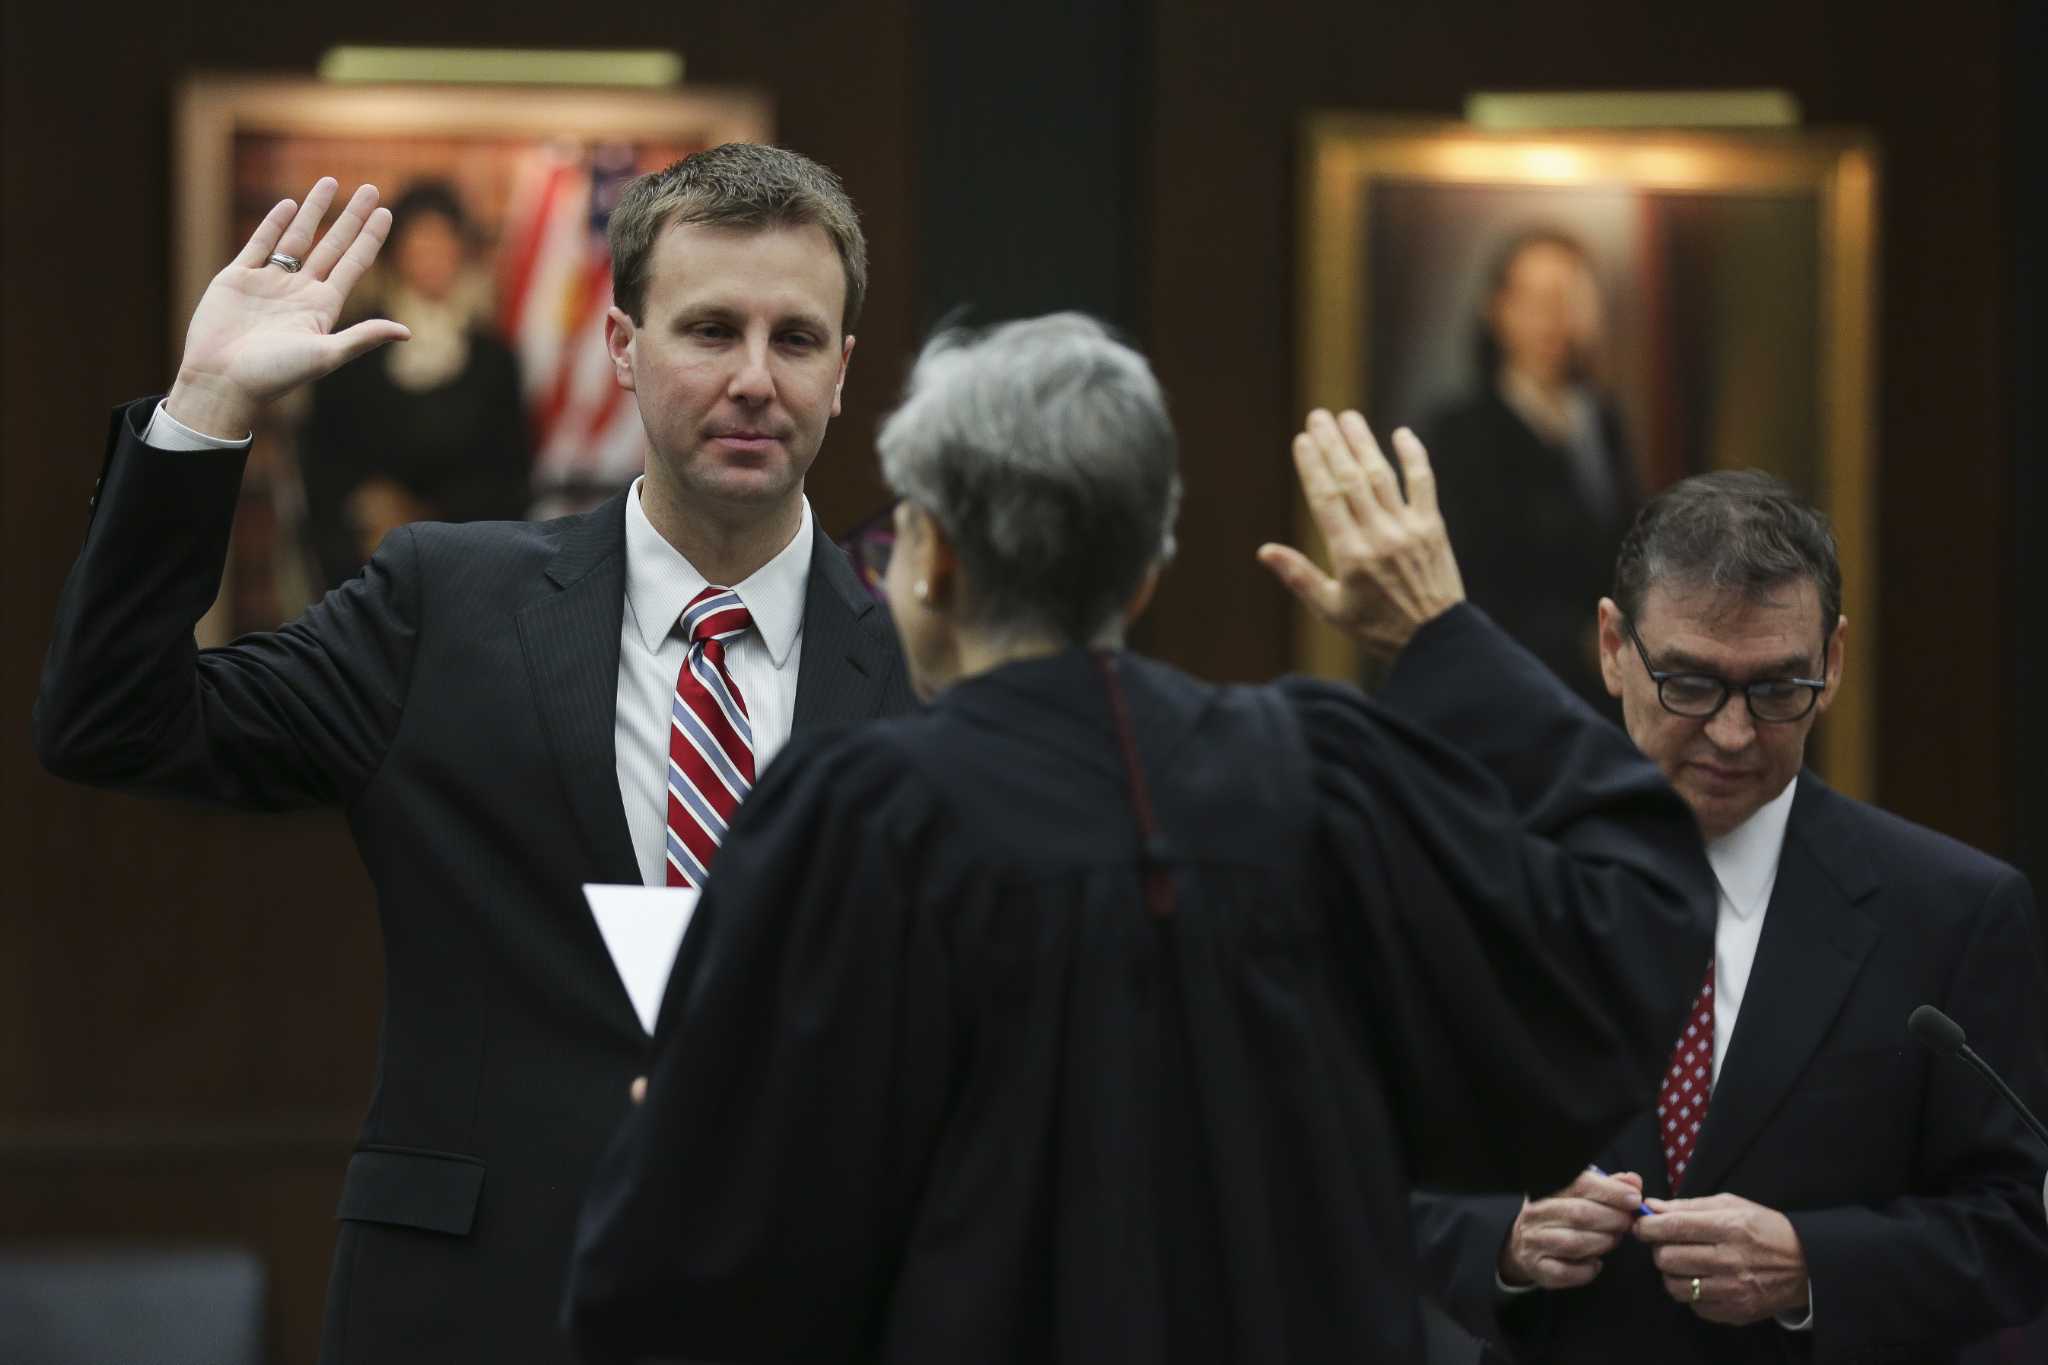 U.S. Attorney Ryan Patrick takes the helm in Houston - Houston Chronicle